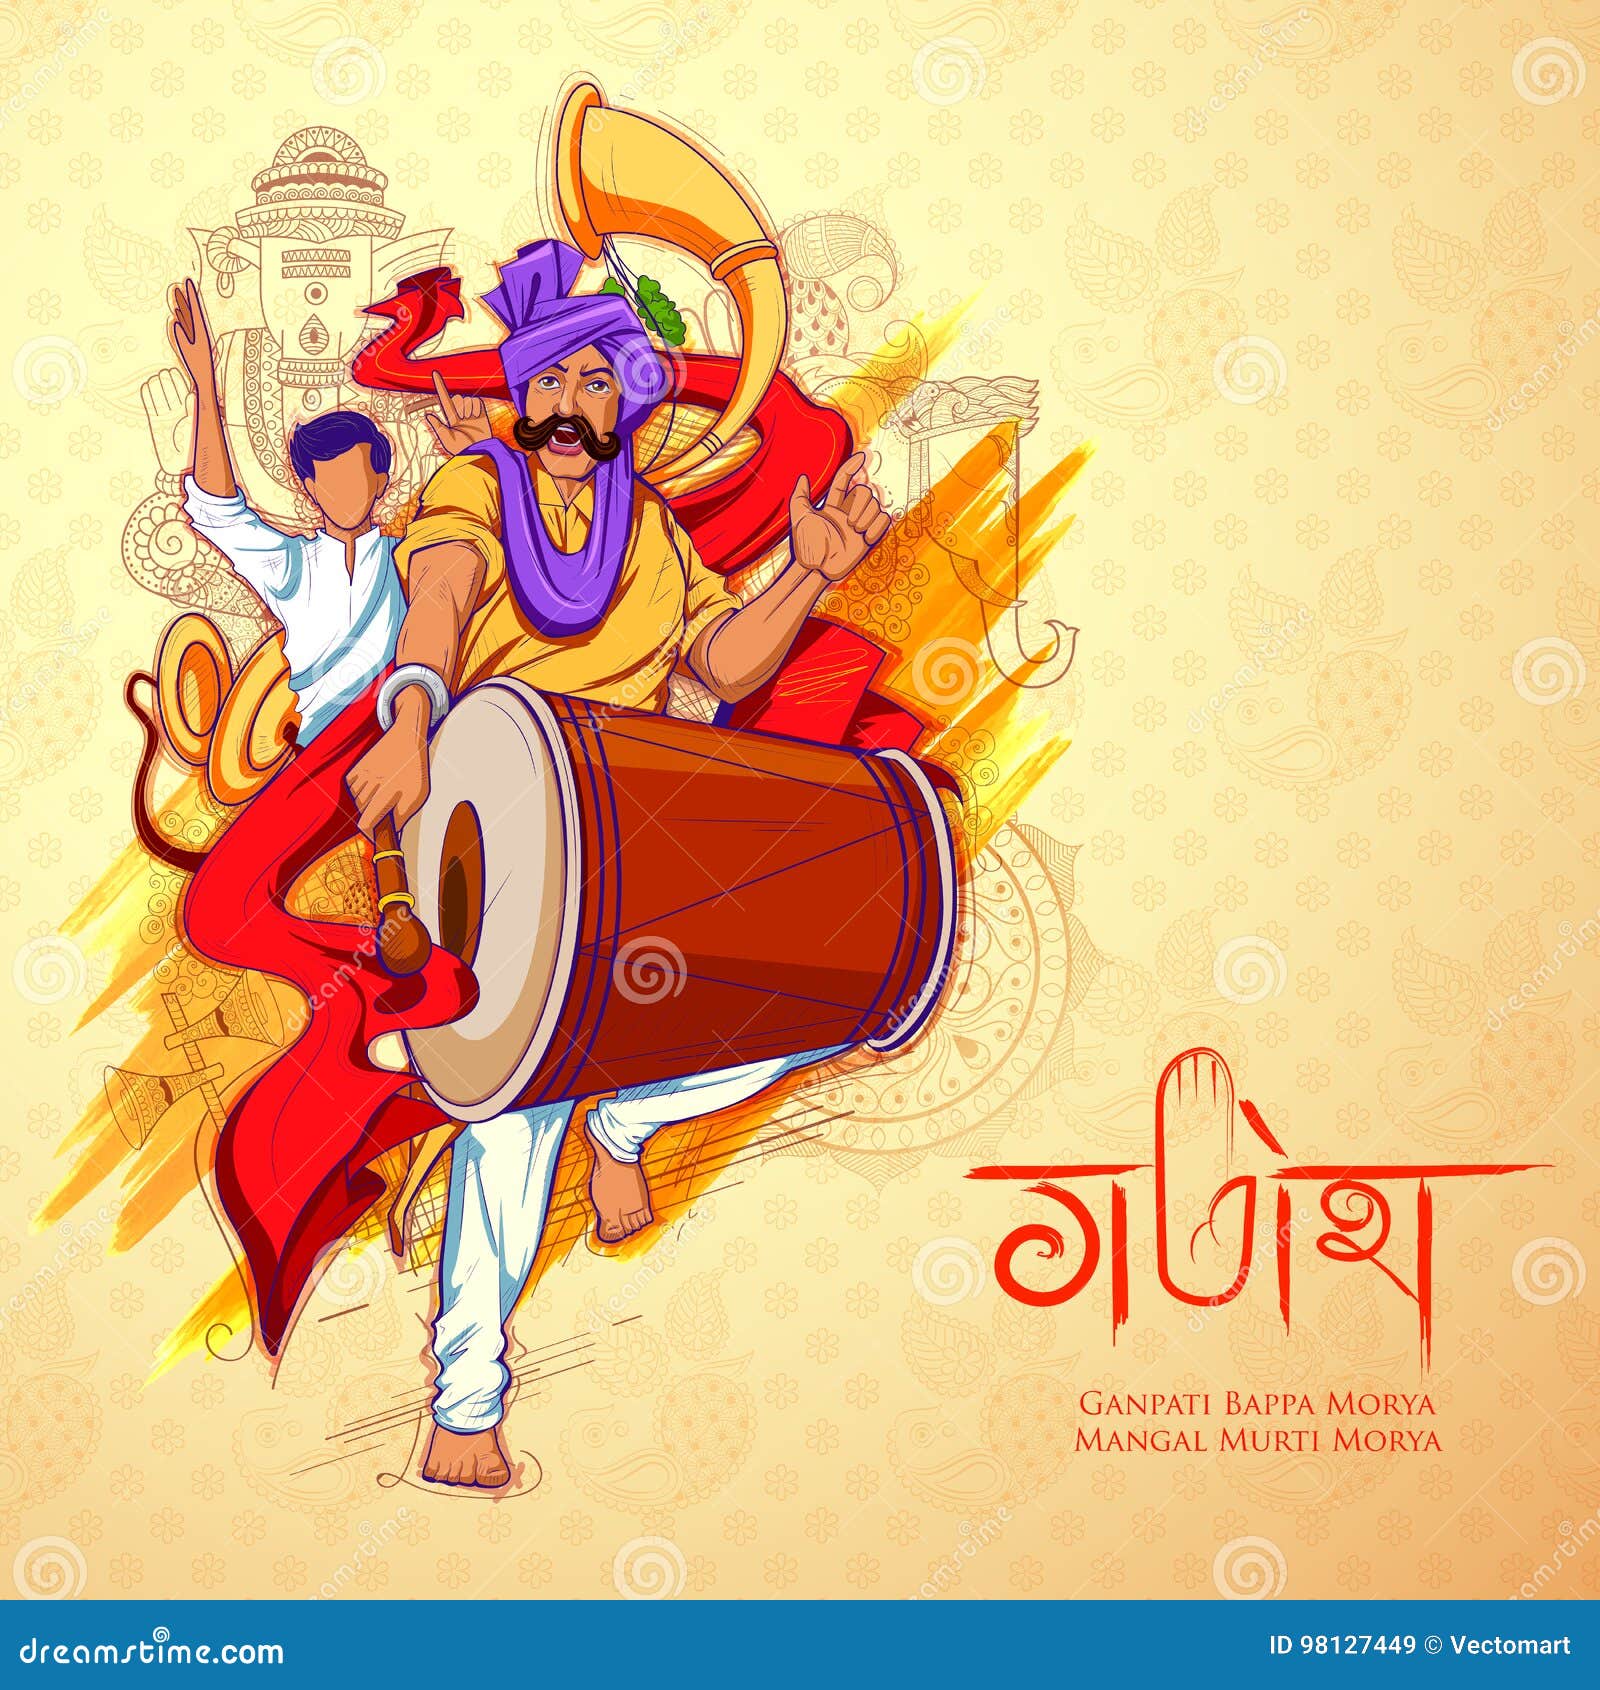 Lord Ganpati Background for Ganesh Chaturthi Stock Vector - Illustration of  ganpati, festival: 98127449